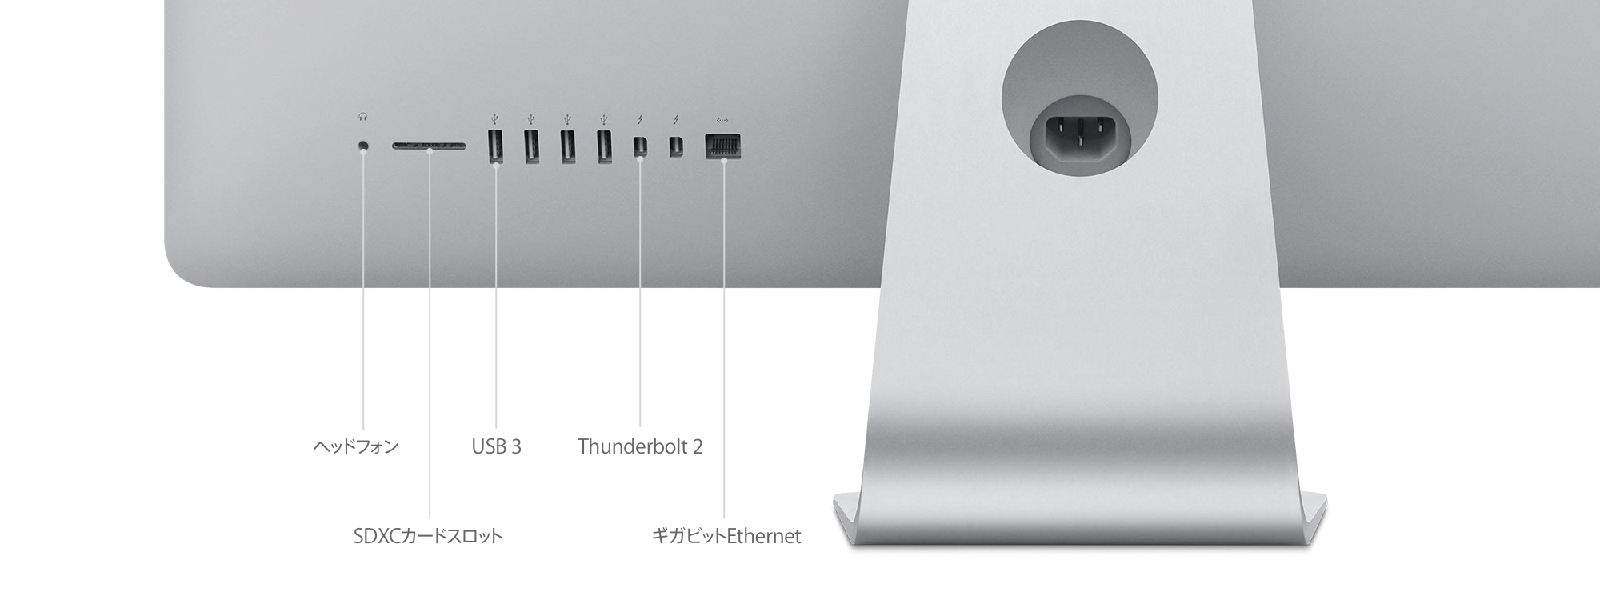 iMac (21.5-inch, Late 2015) - 技術仕様 (日本)